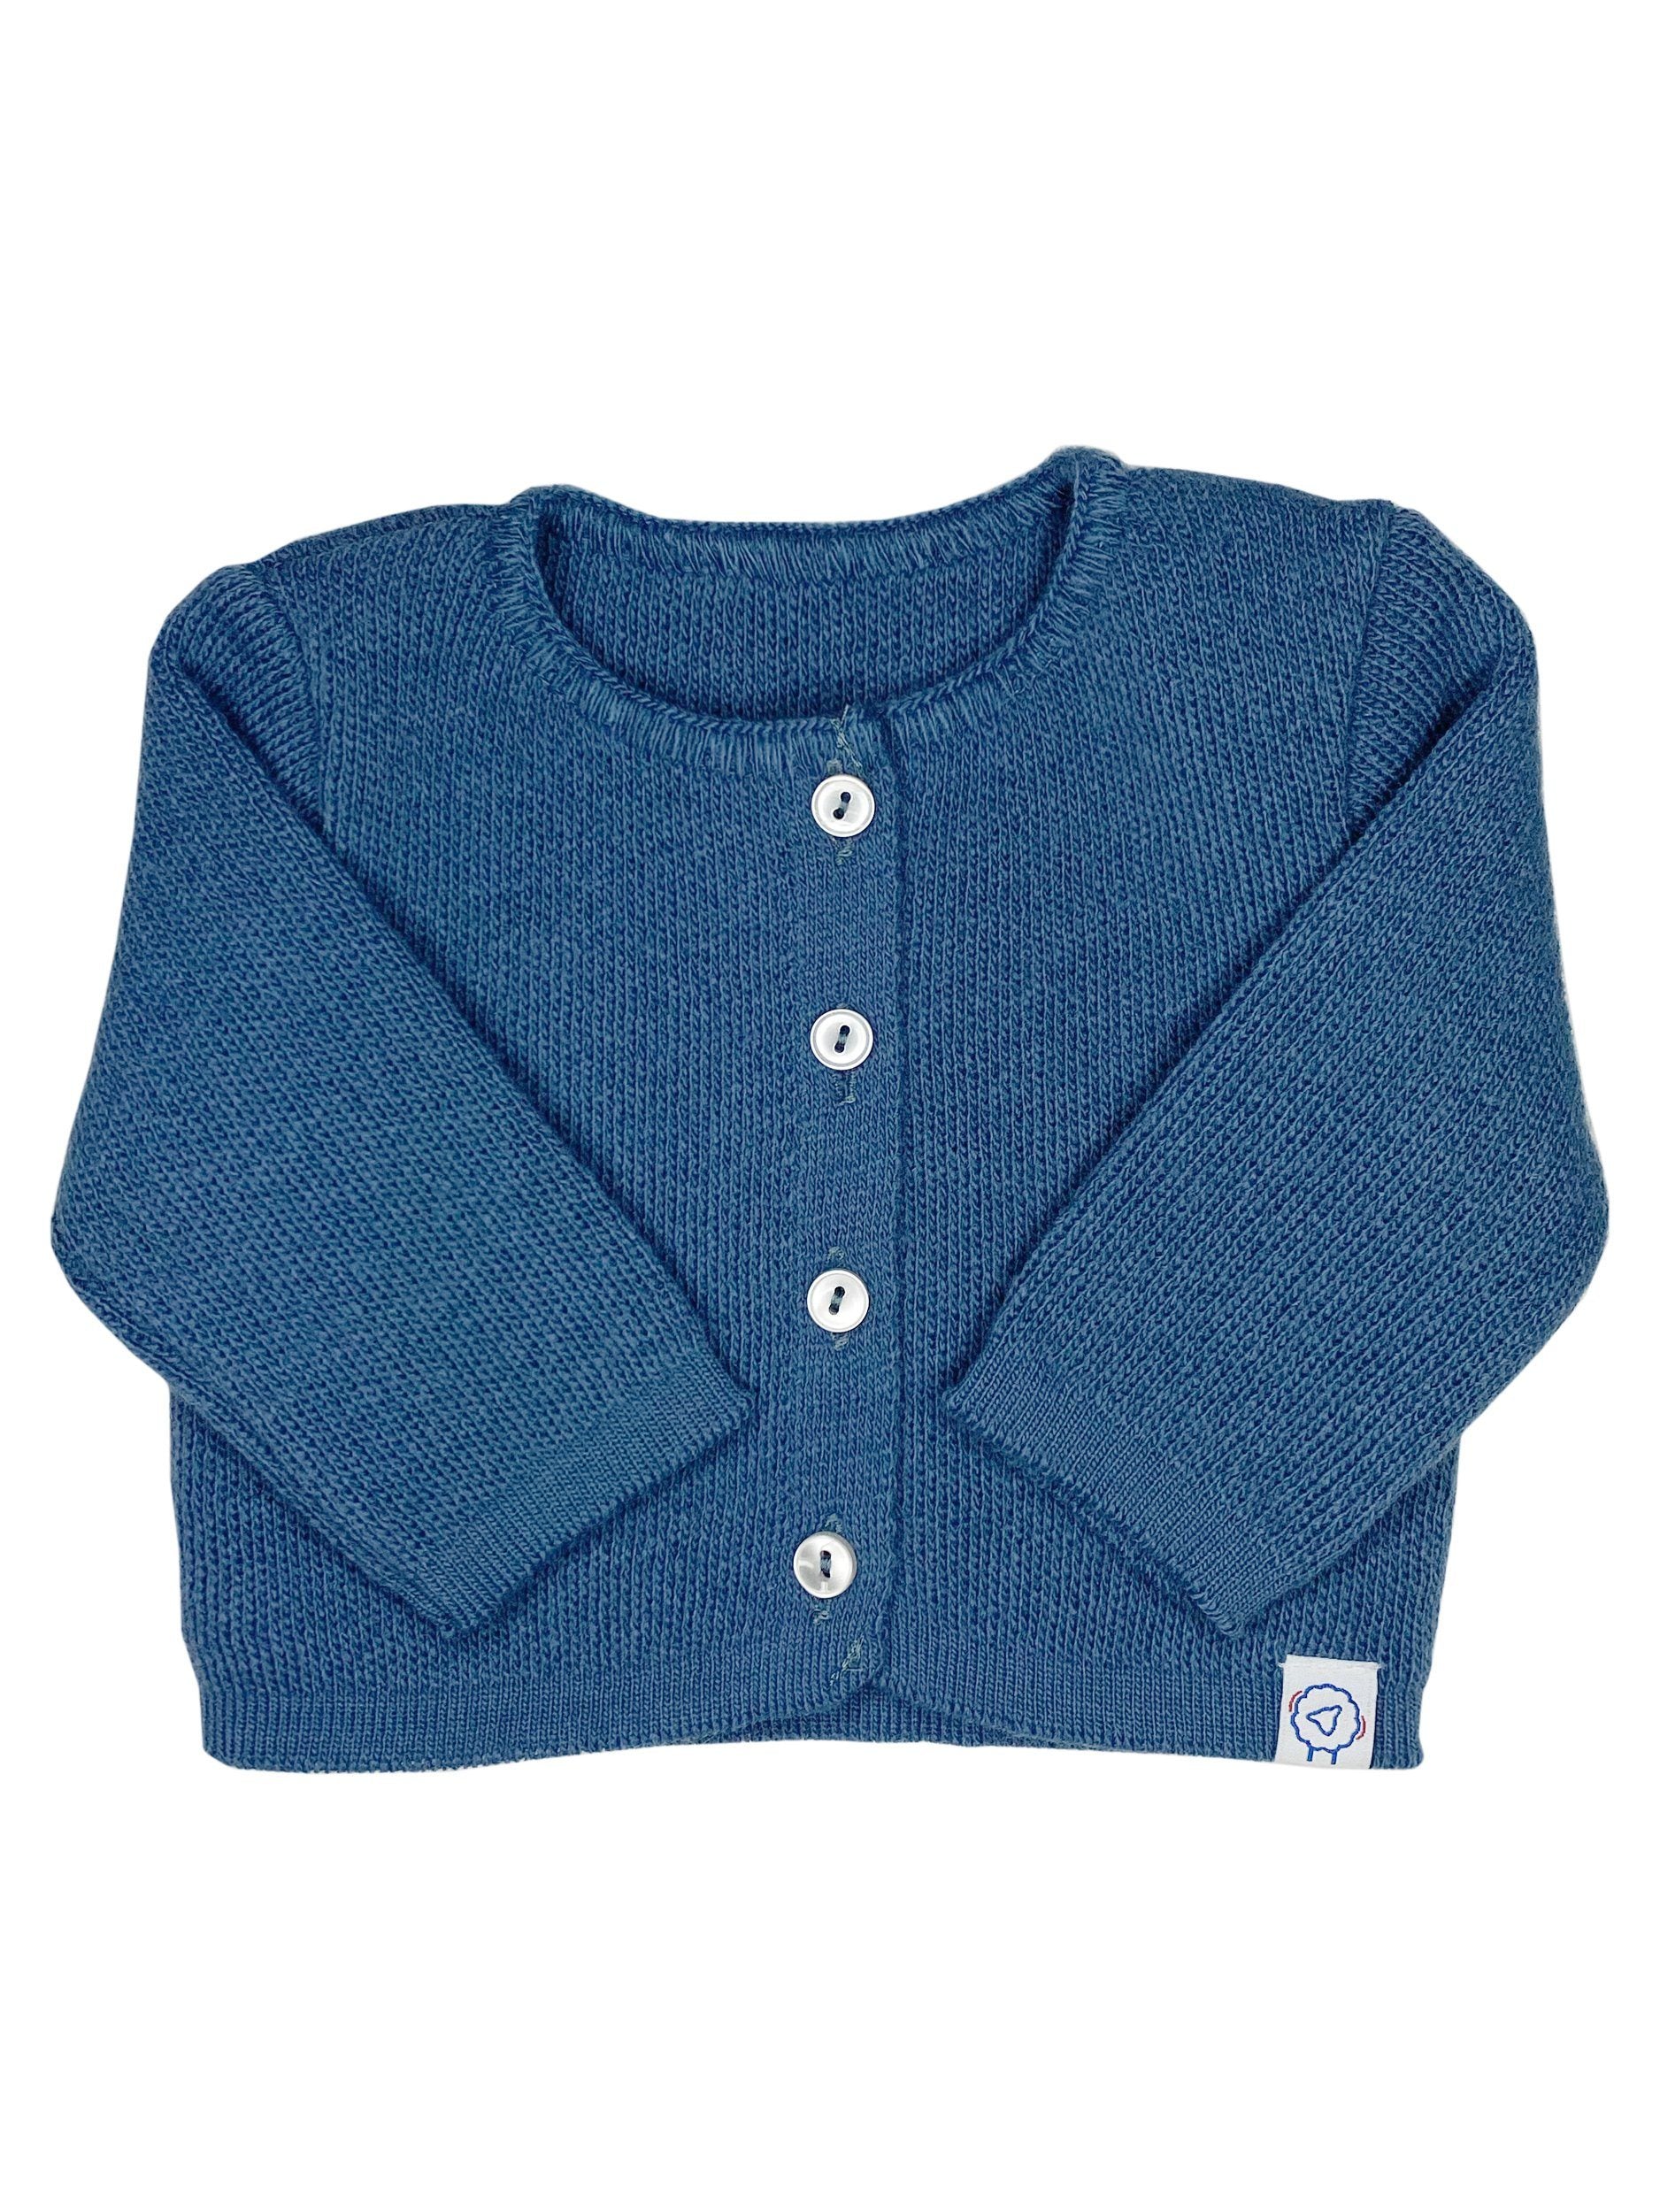 Knitted Azure Blue Soft Cardigan - Cardigan / Jacket - La Manufacture de Layette